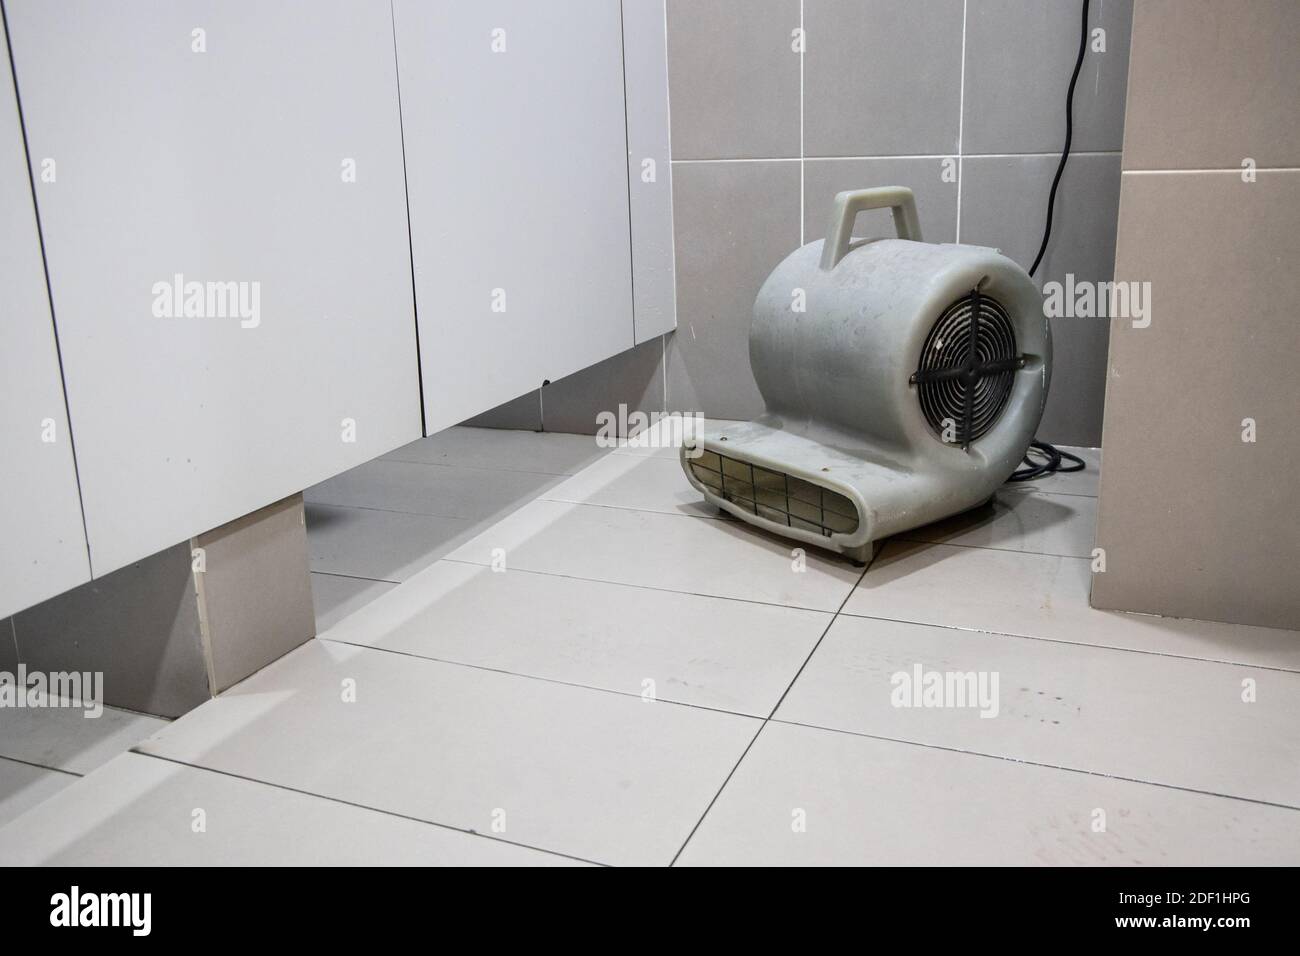 Boden Trockner Gebläse Ventilator Maschine im Bad trocknen nassen Boden  Stockfotografie - Alamy